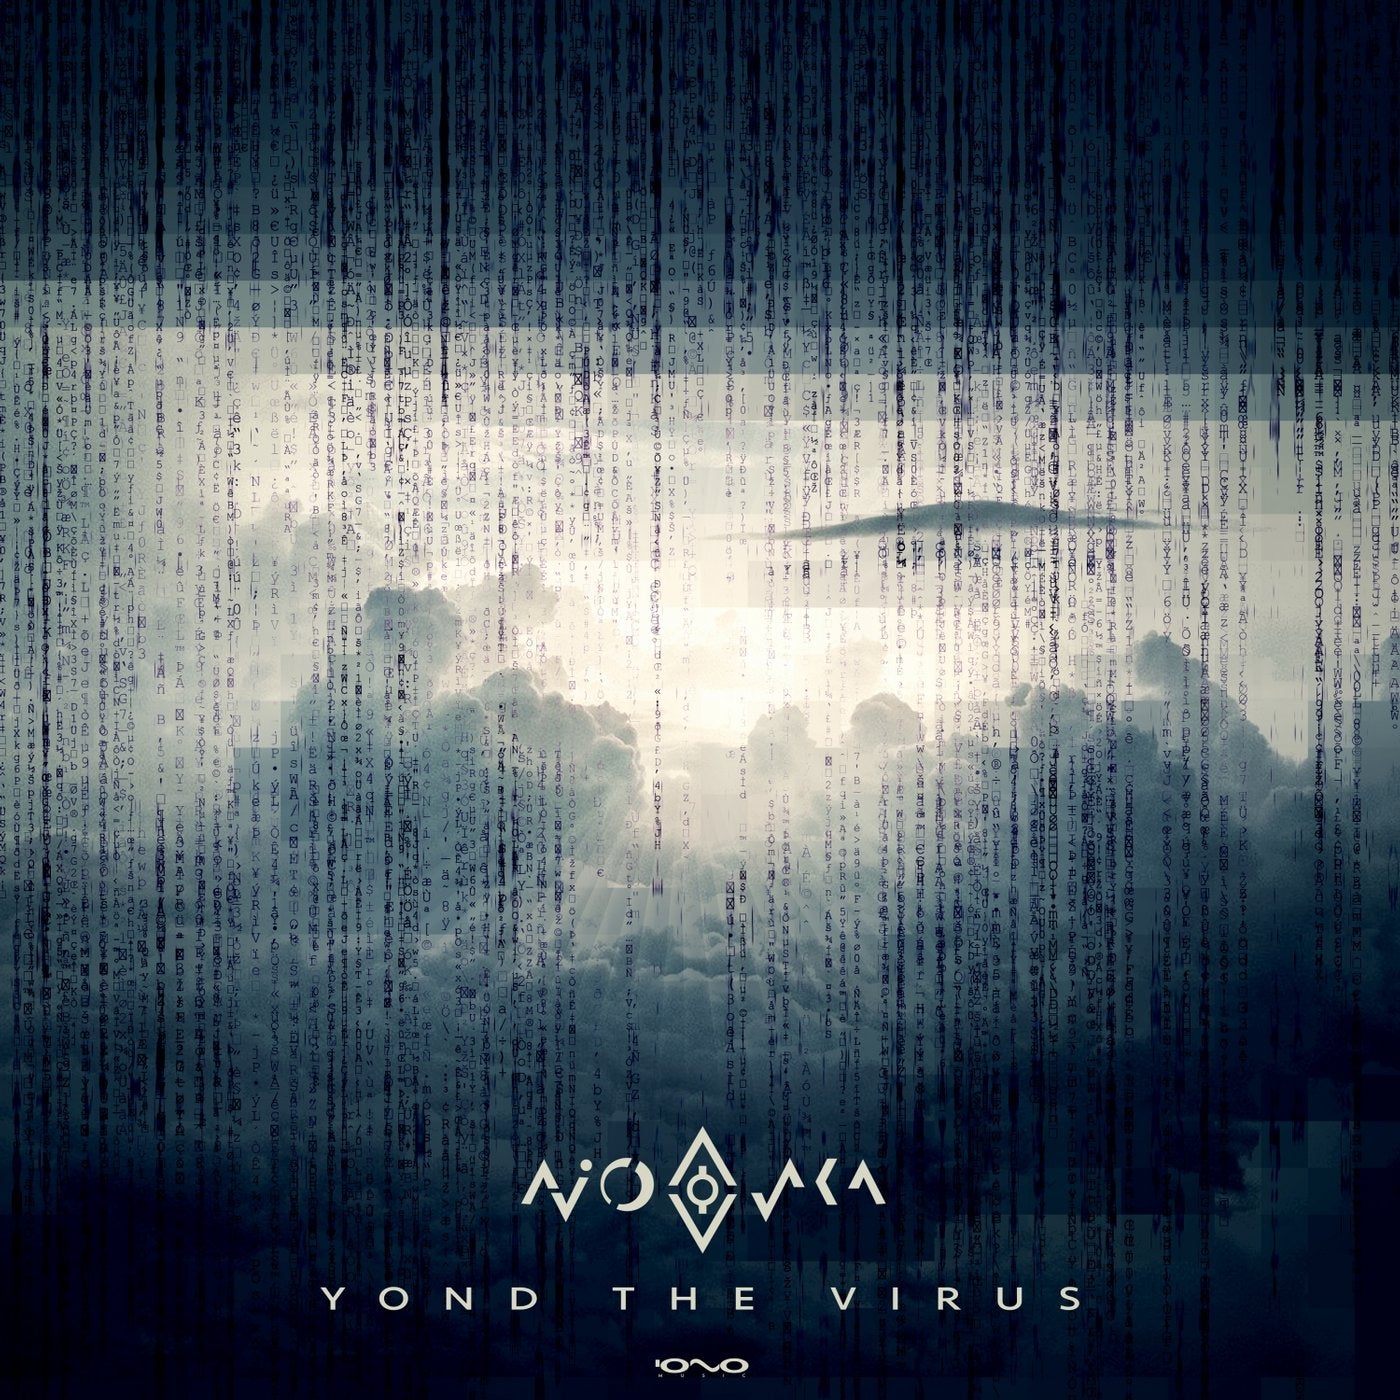 Yond the Virus